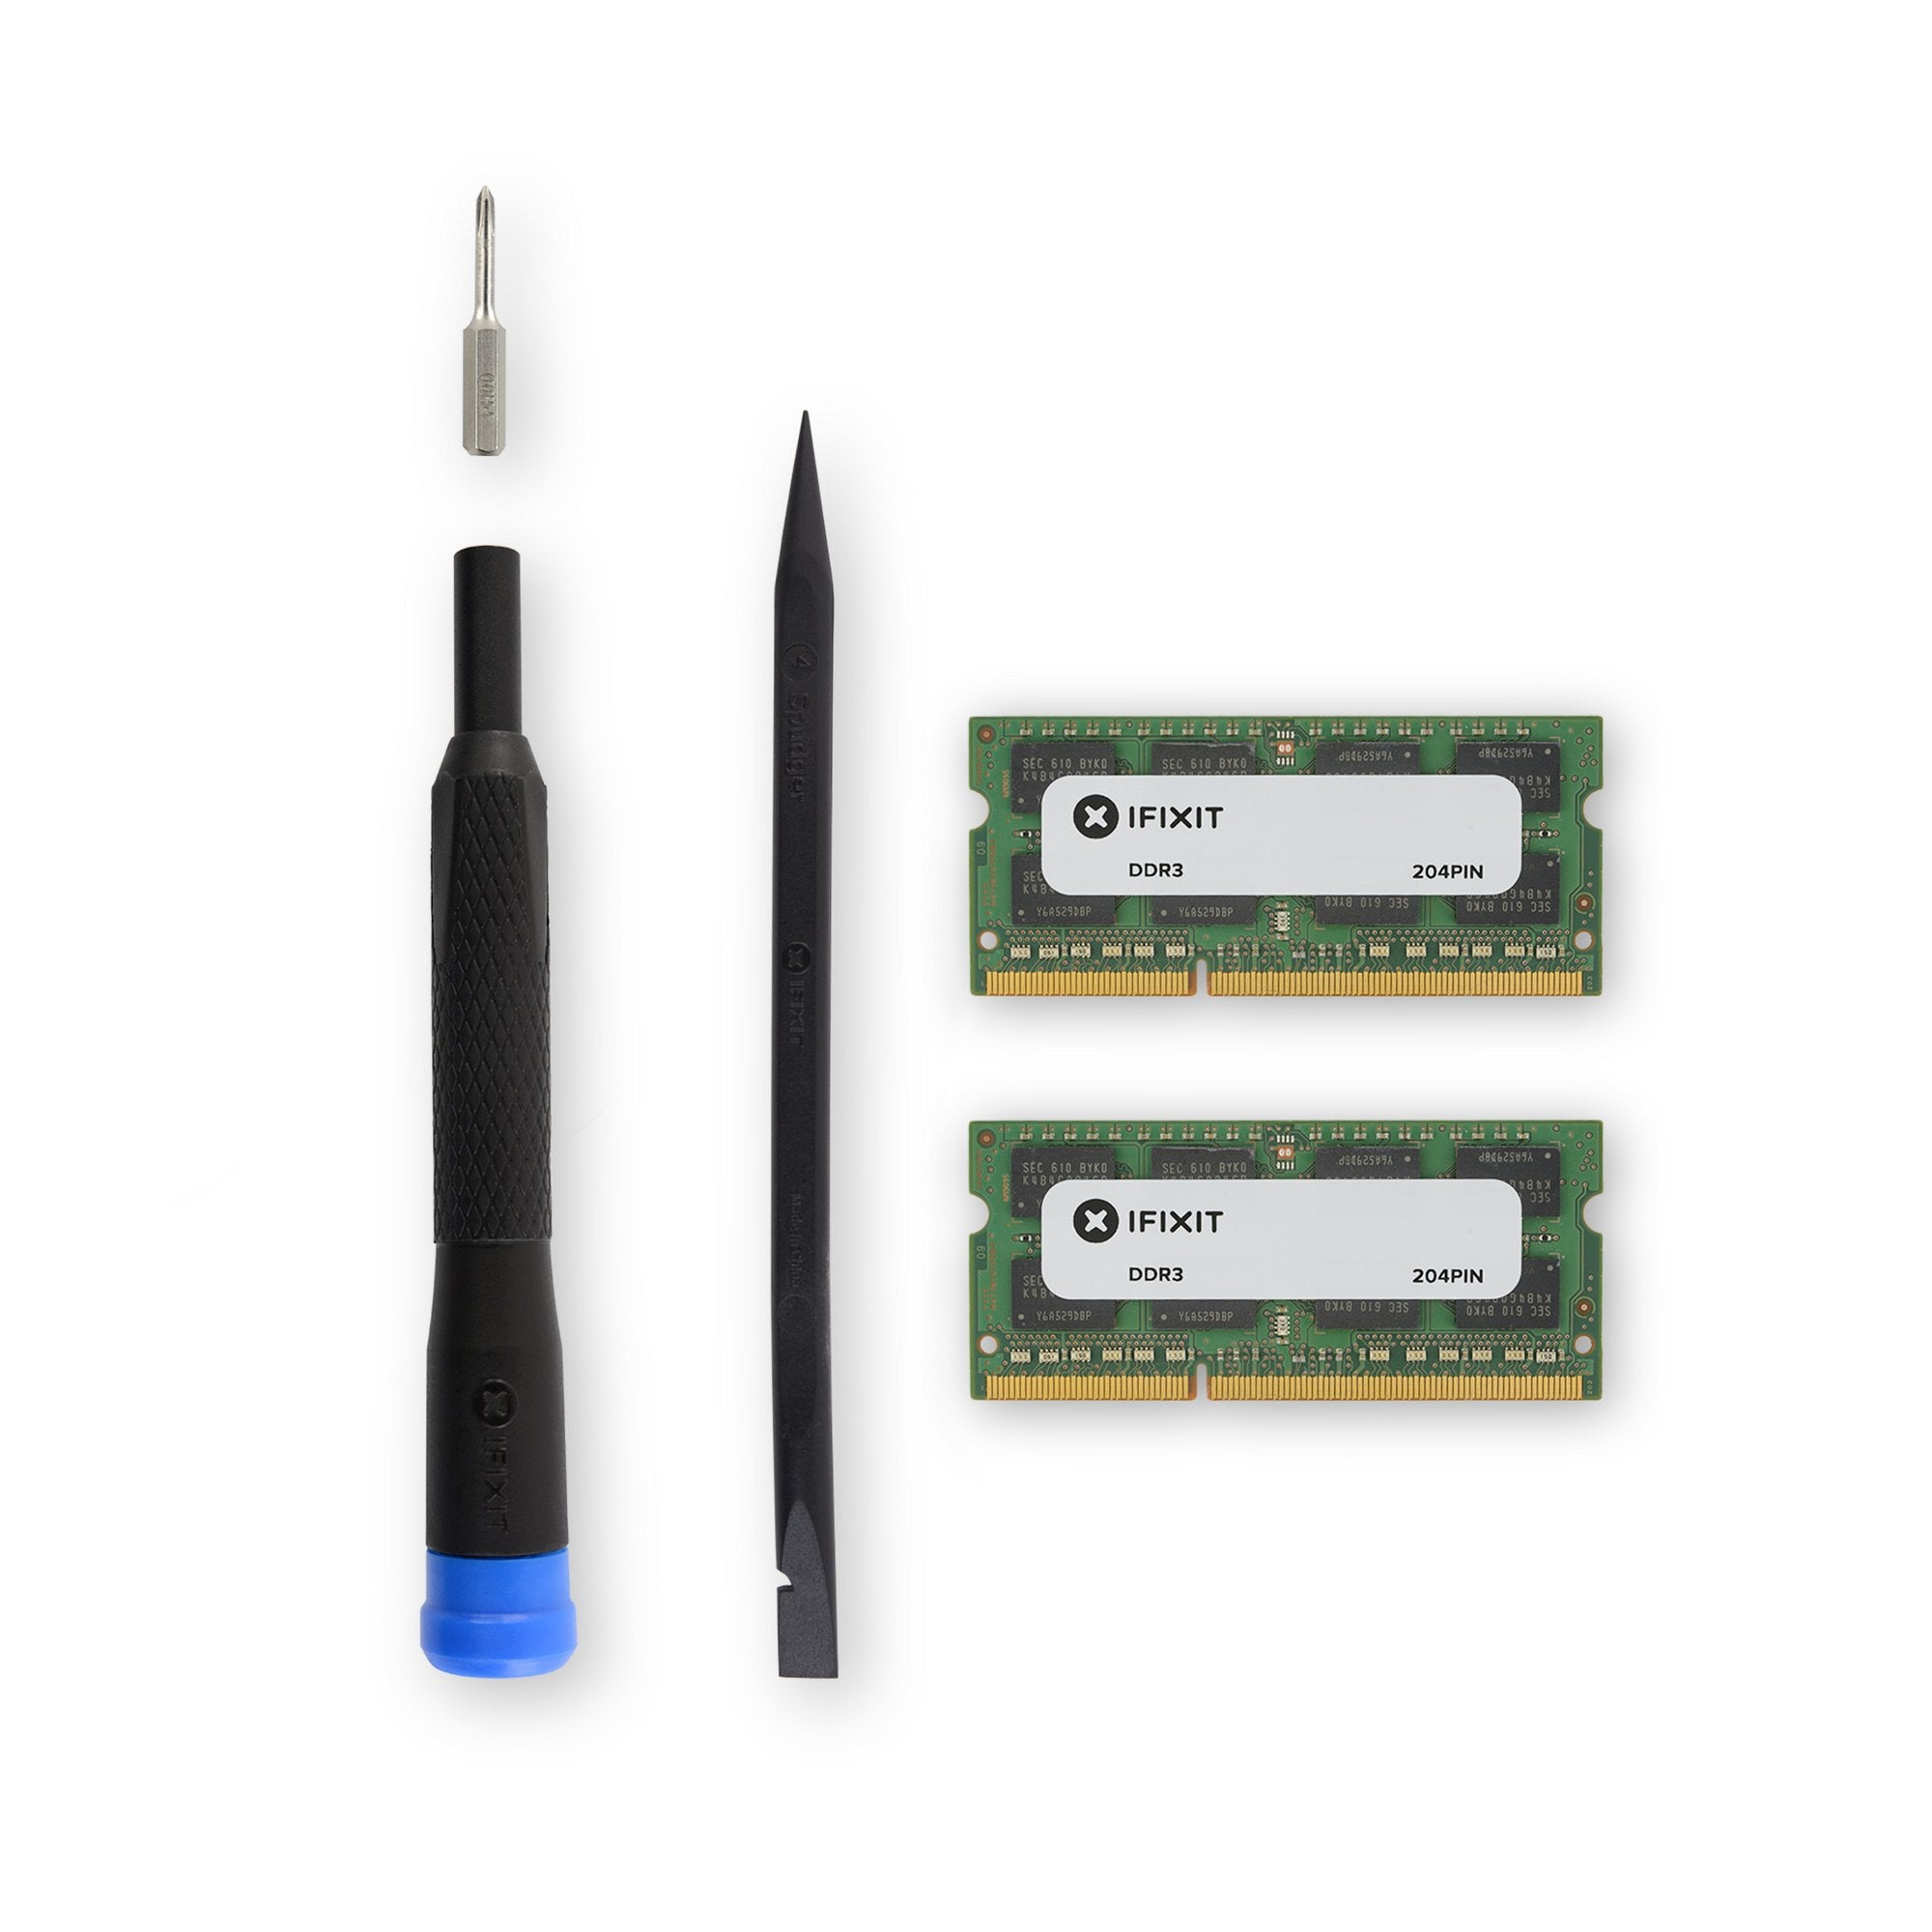 MacBook Pro 15" Unibody (Mid 2012) Memory Maxxer RAM Upgrade Kit New